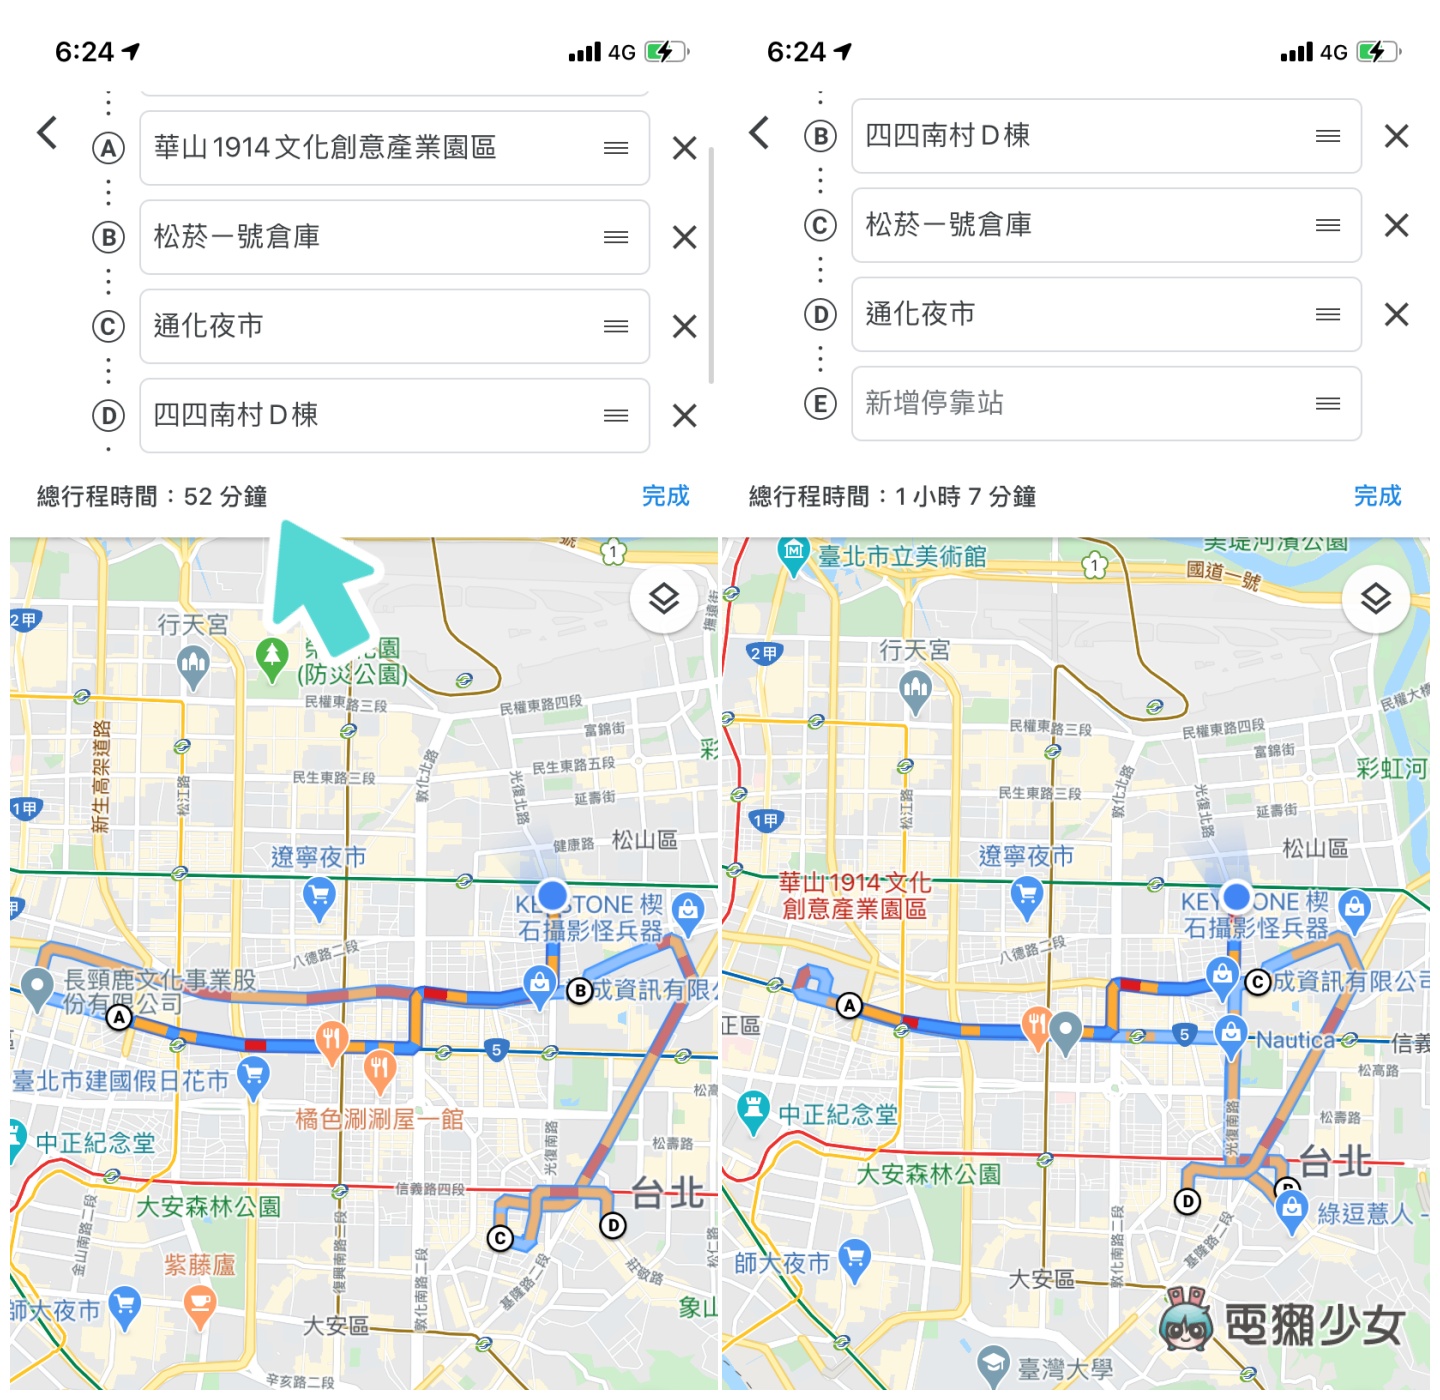 Google Maps 超實用小功能！多點路線安排、記錄停車位置 還可以查詢去過哪裡、通勤路線設定超好用！